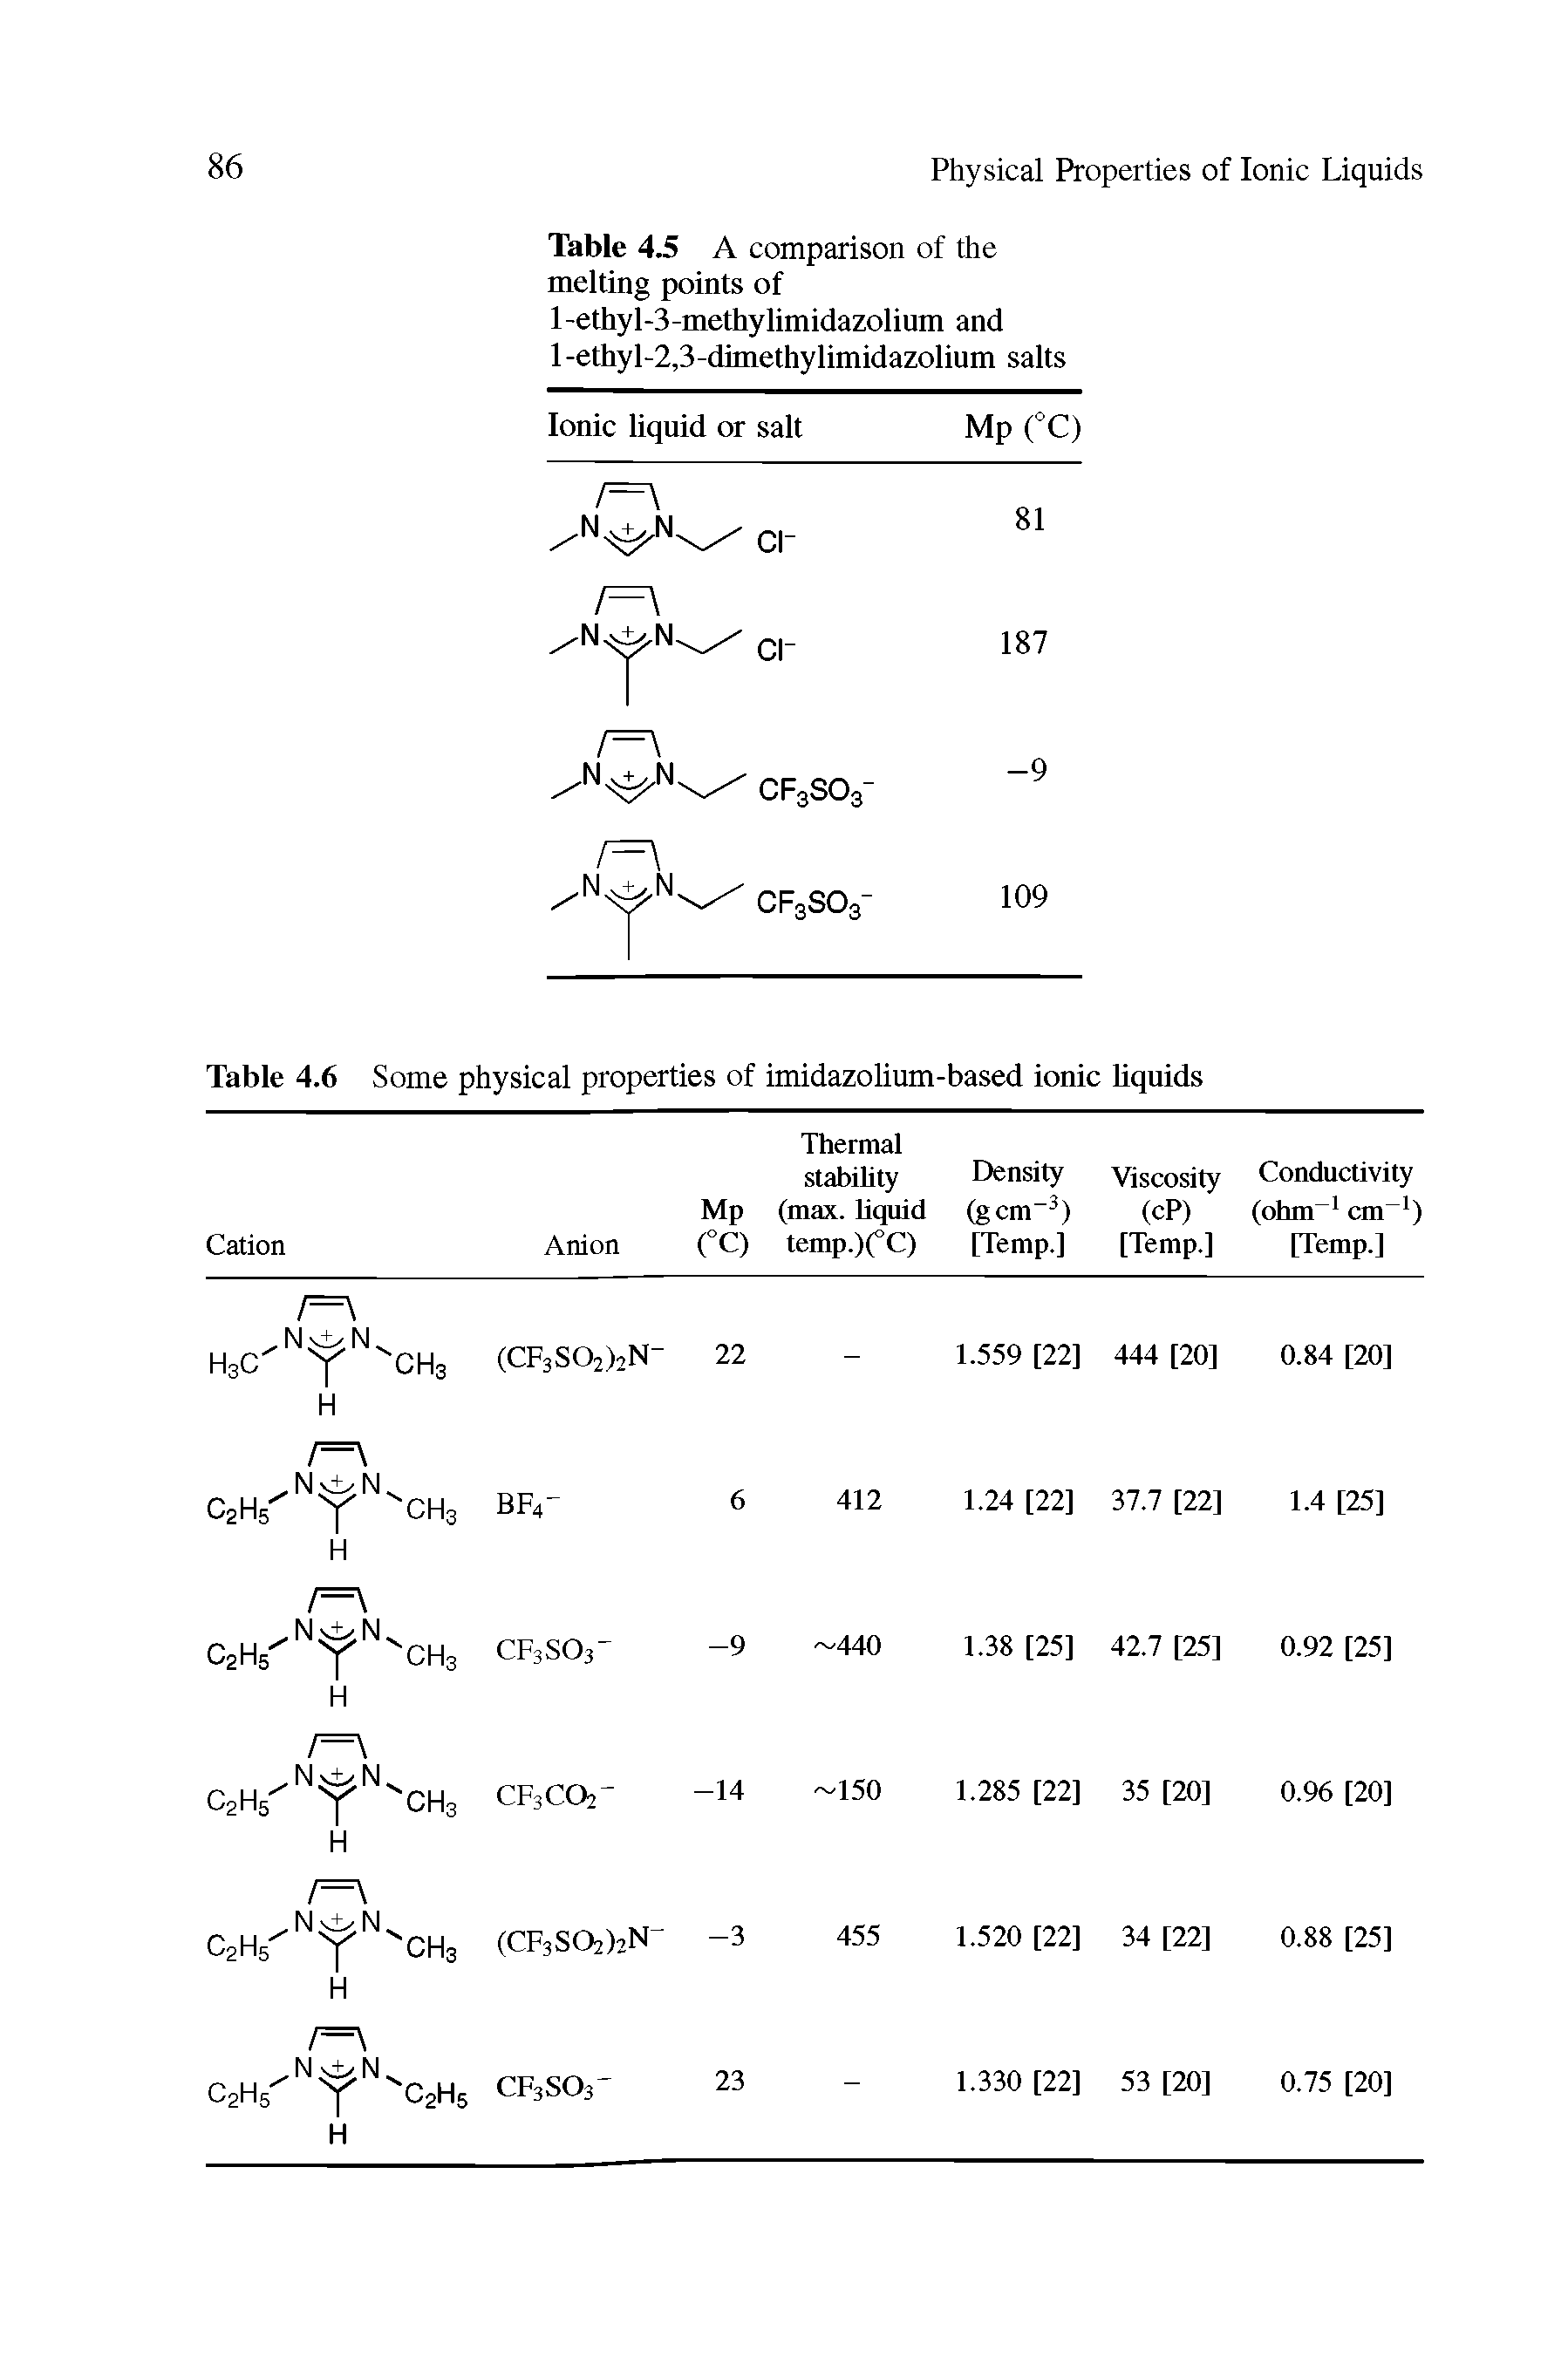 Table 4.5 A comparison of the melting points of l-ethyl-3-methylimidazolium and 1 -ethyl-2,3-dimethylimidazolium salts...